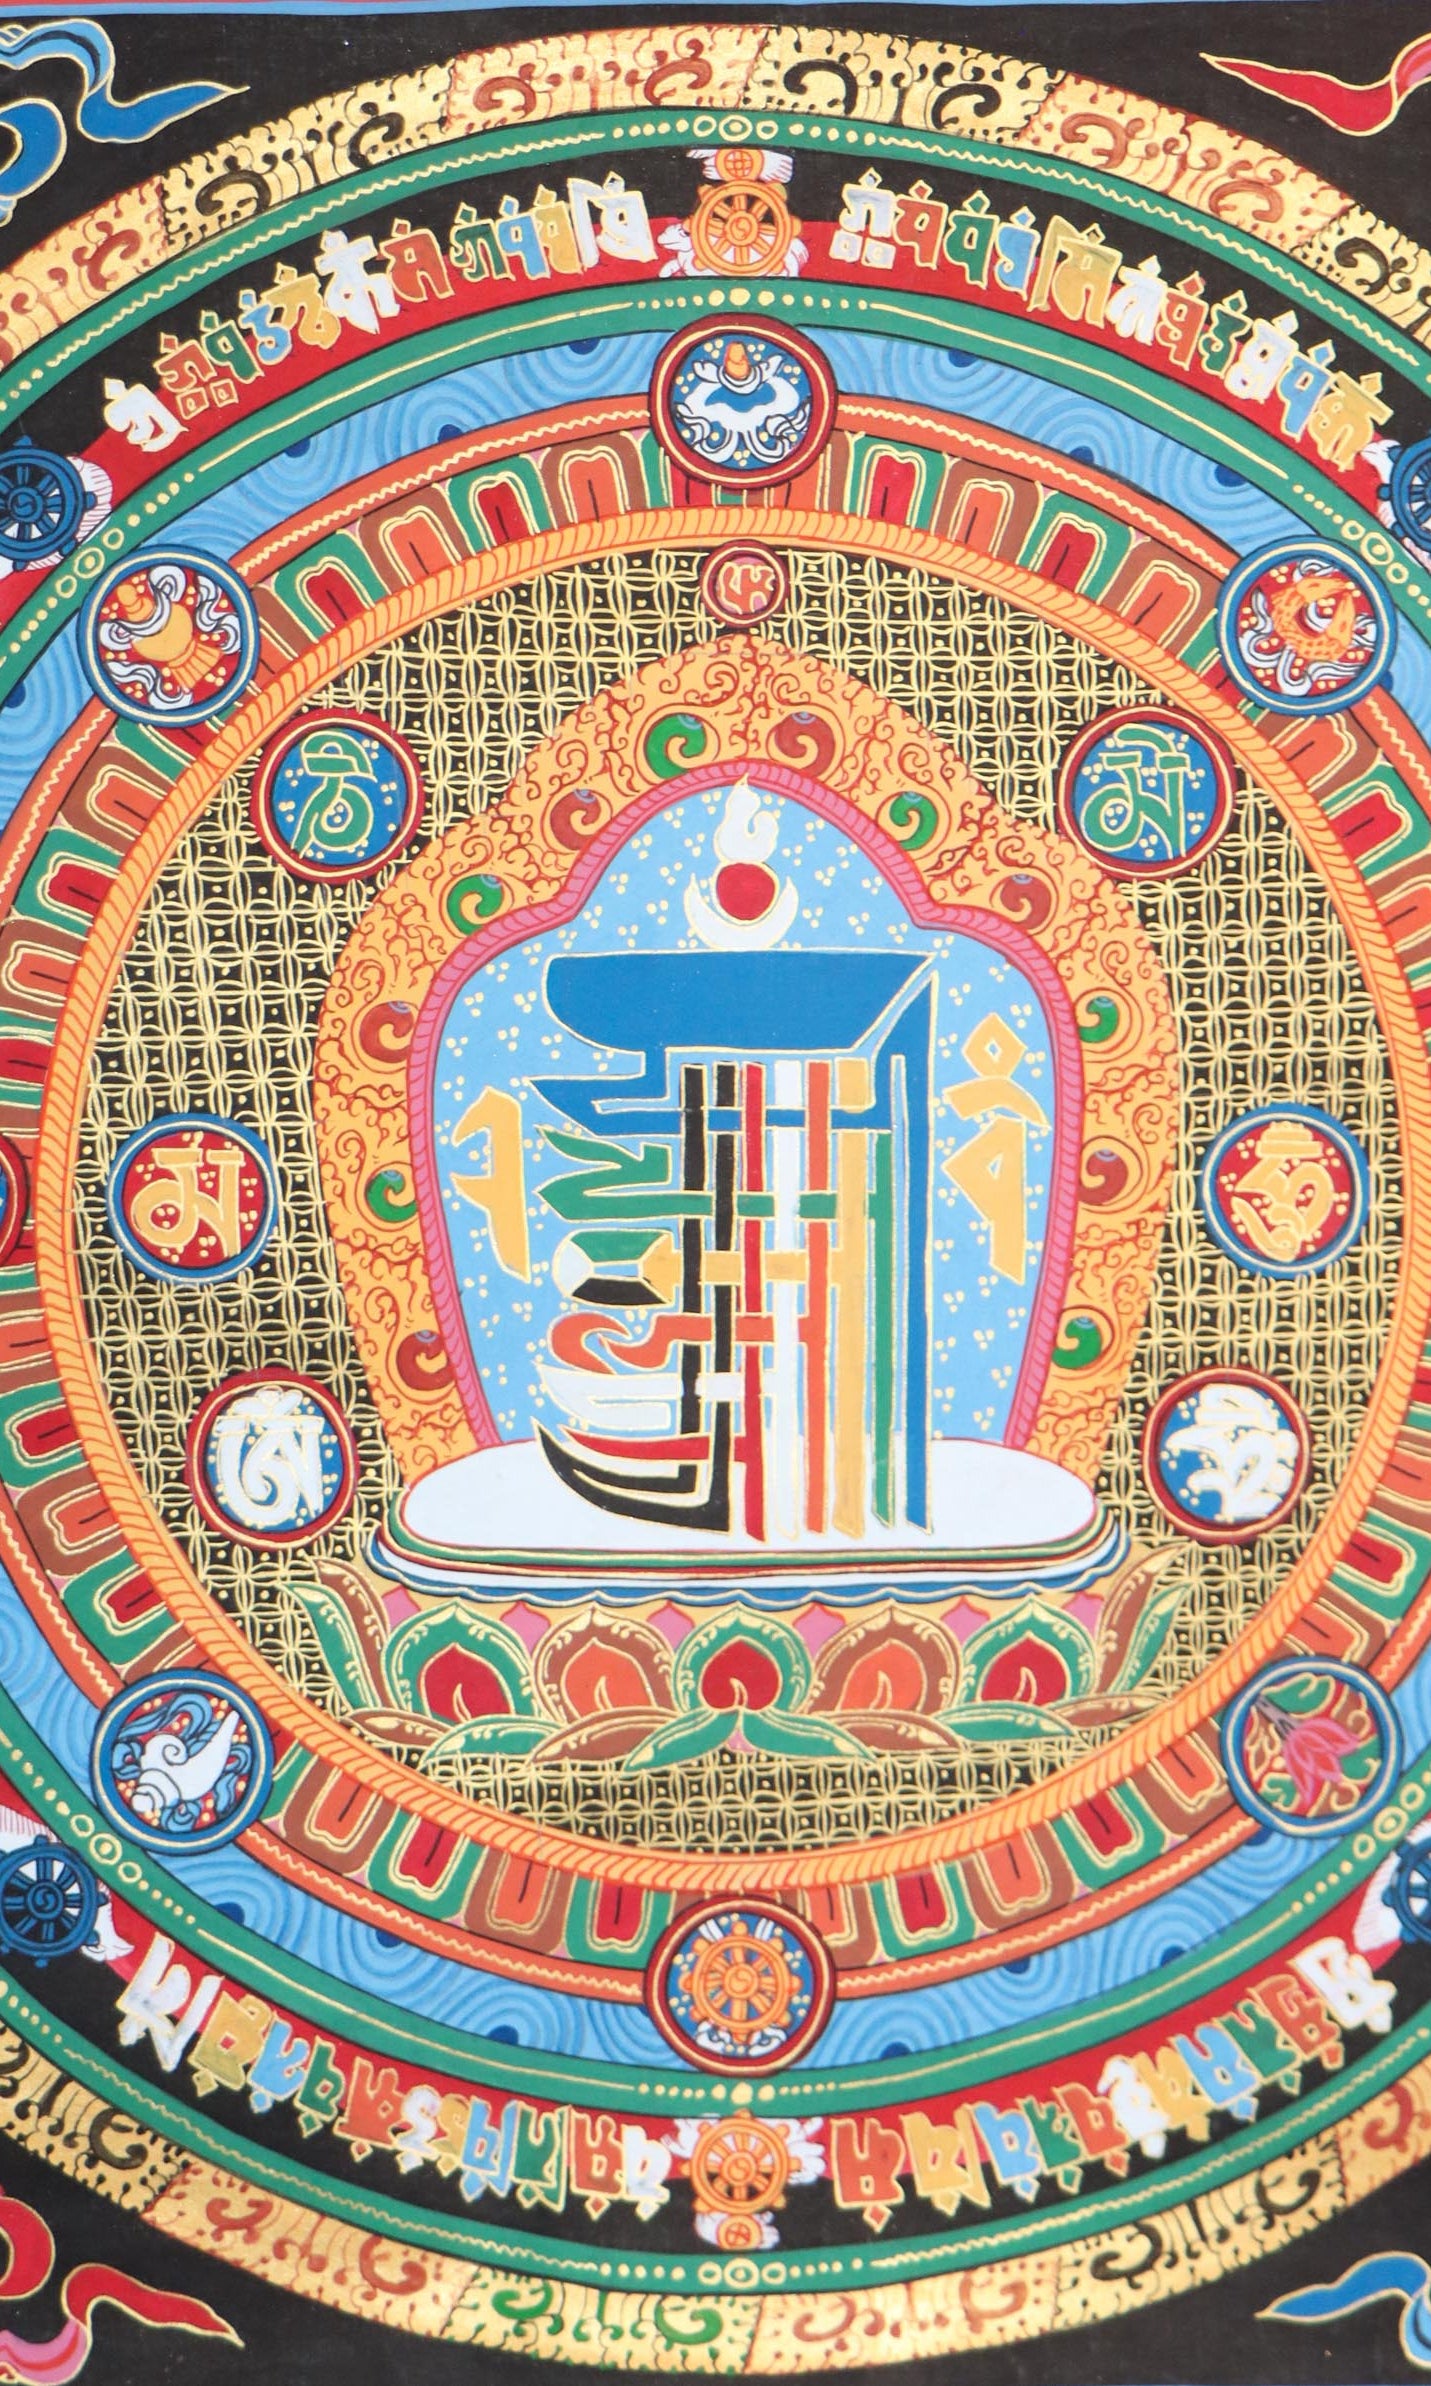 Kalchakra Mantra of 12 syllables Thangka Painting on canvas